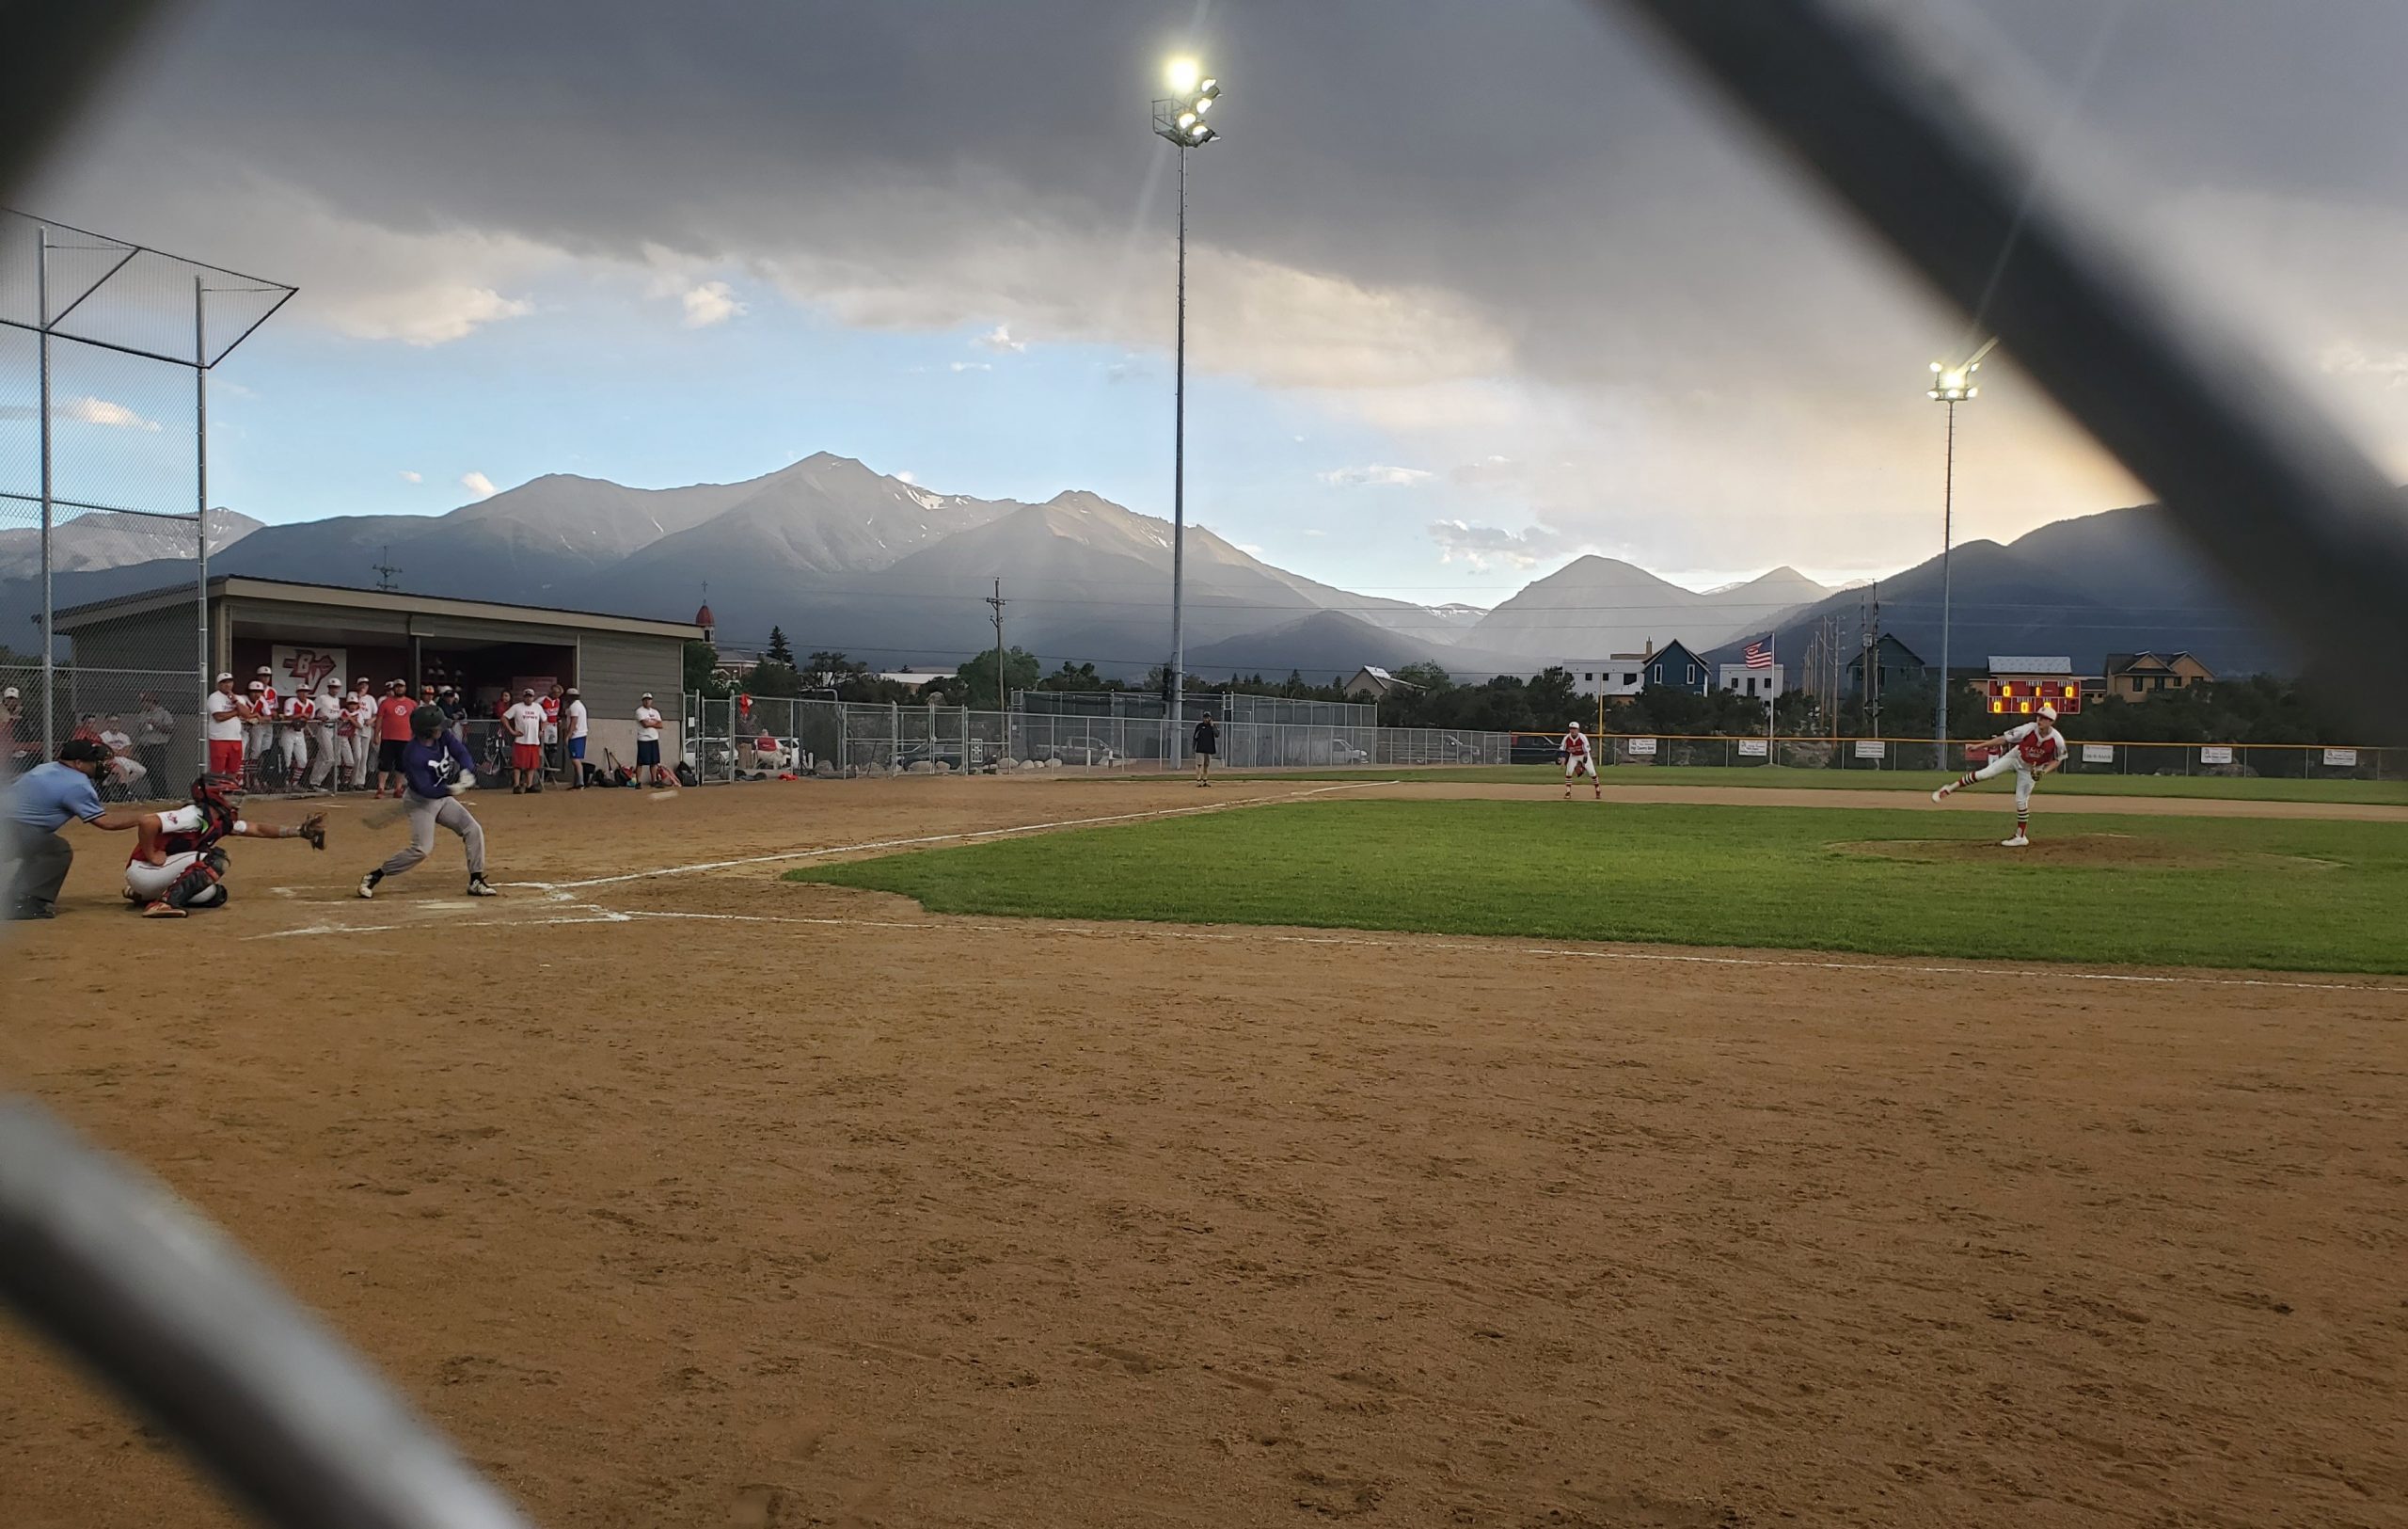 The return of summer baseball brings joy in Buena Vista